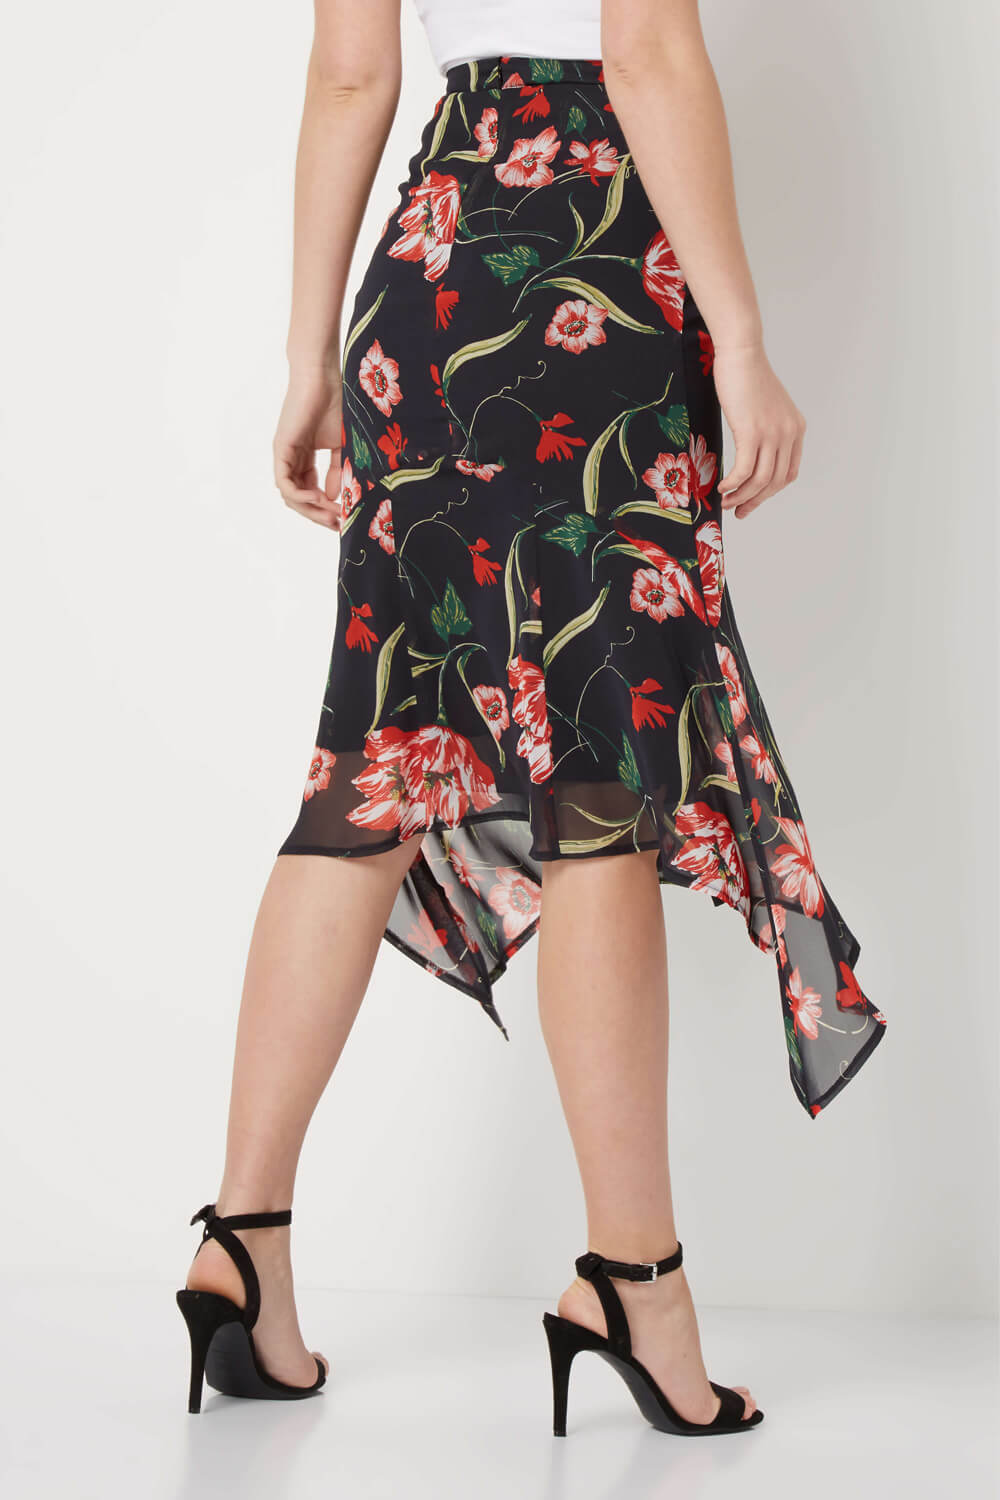 Black Floral Chiffon Skirt, Image 3 of 5